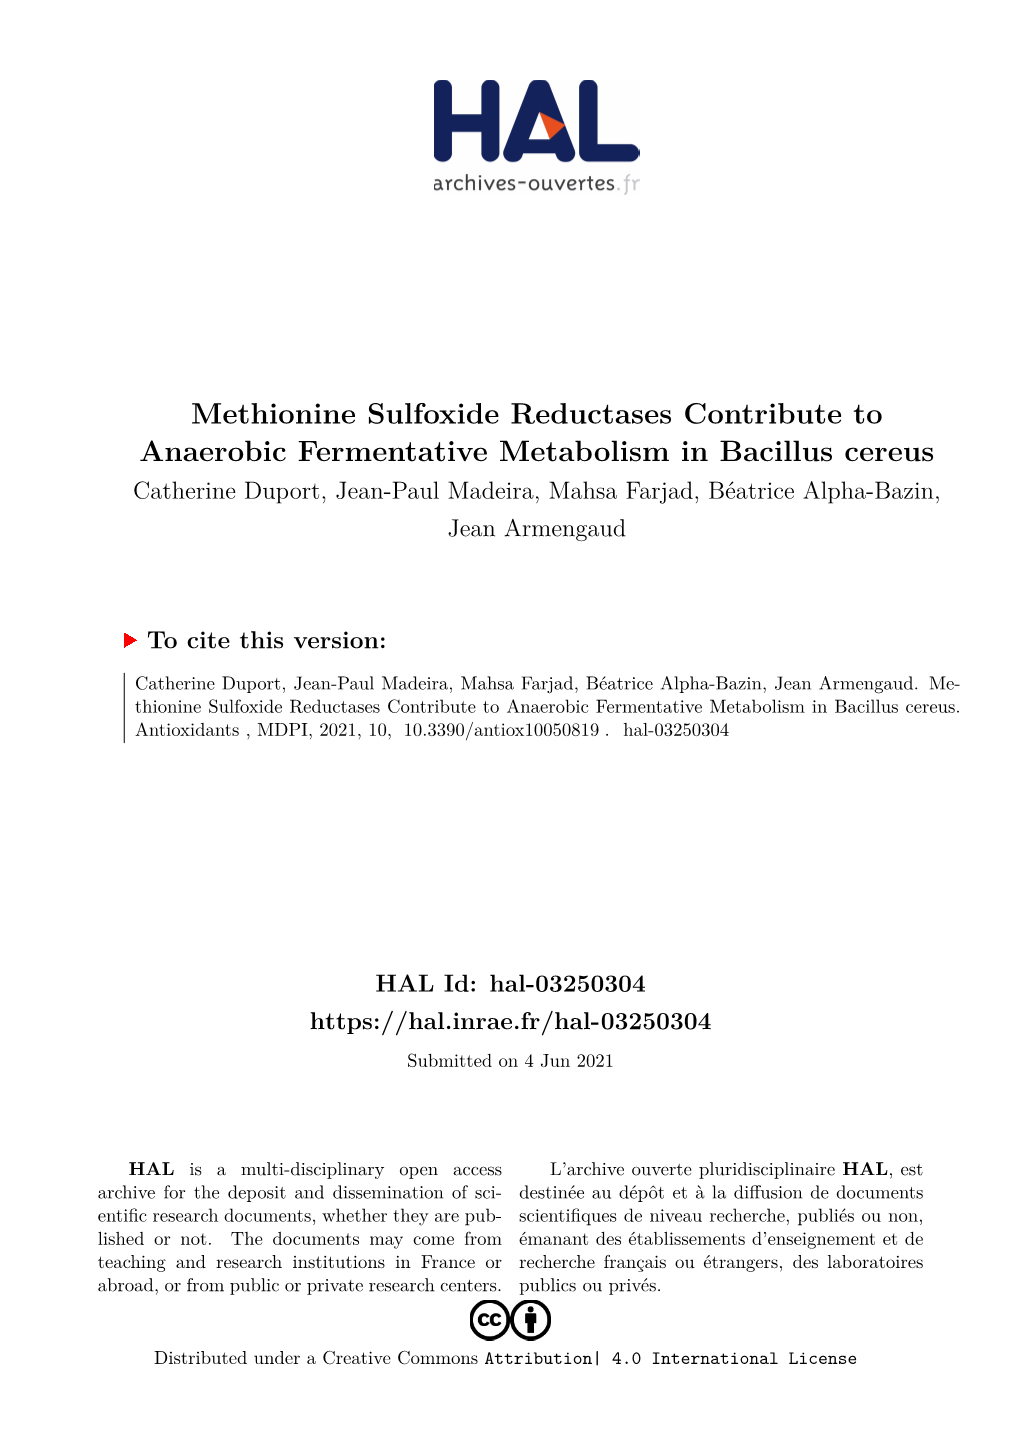 Methionine Sulfoxide Reductases Contribute to Anaerobic Fermentative Metabolism in Bacillus Cereus